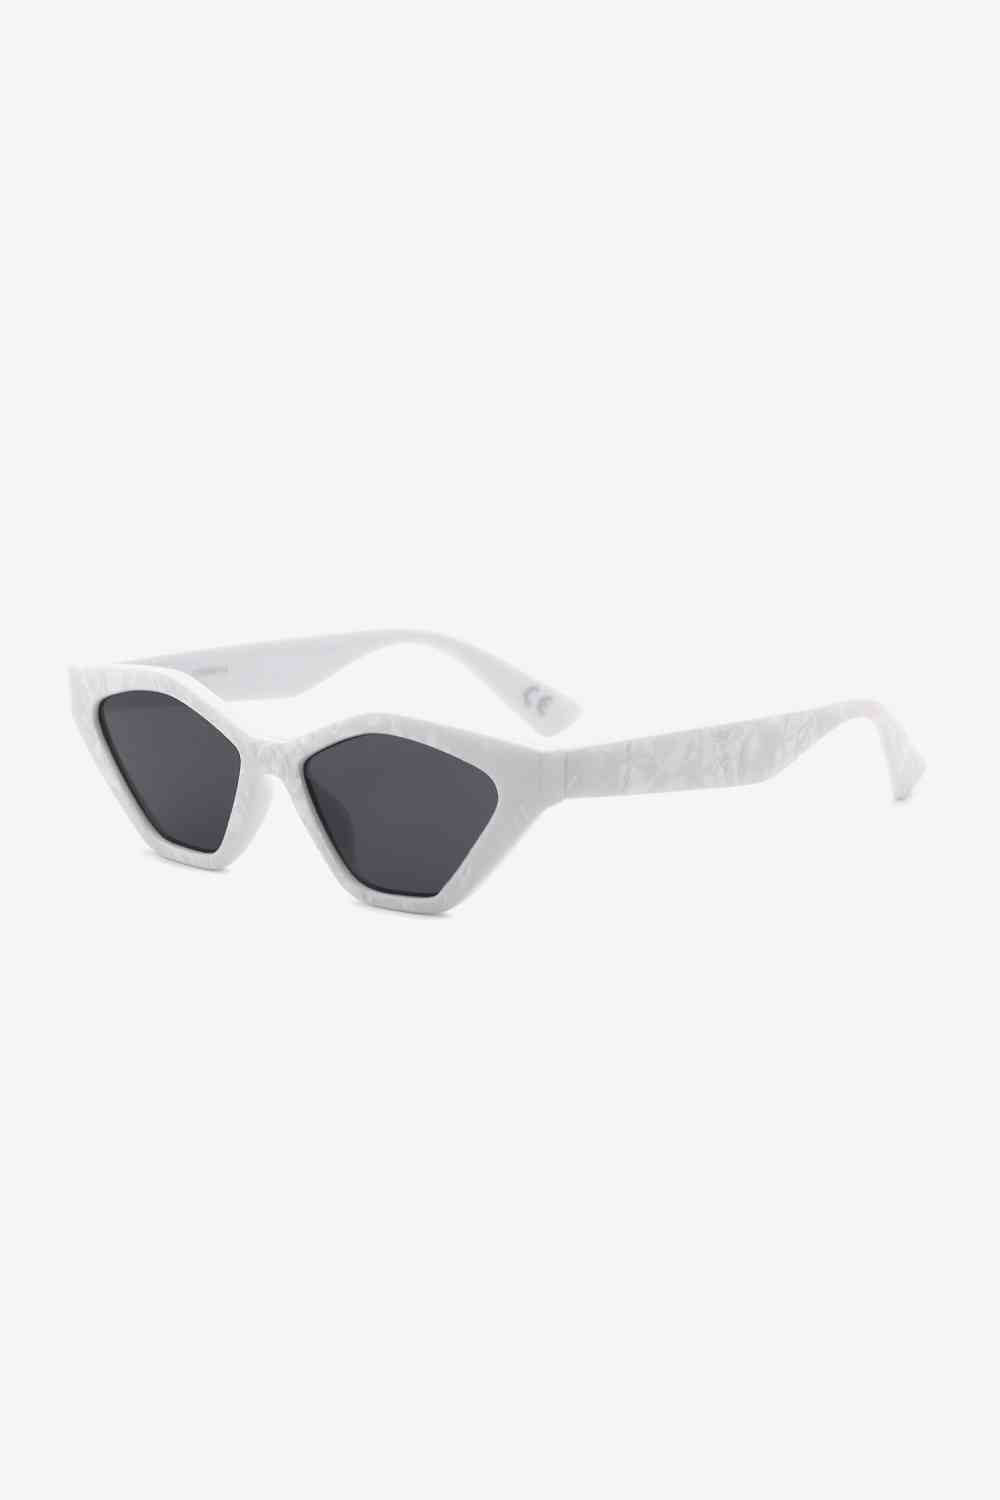 TEEK - Cat Eye Poly Sunglasses EYEGLASSES TEEK Trend Light Gray  